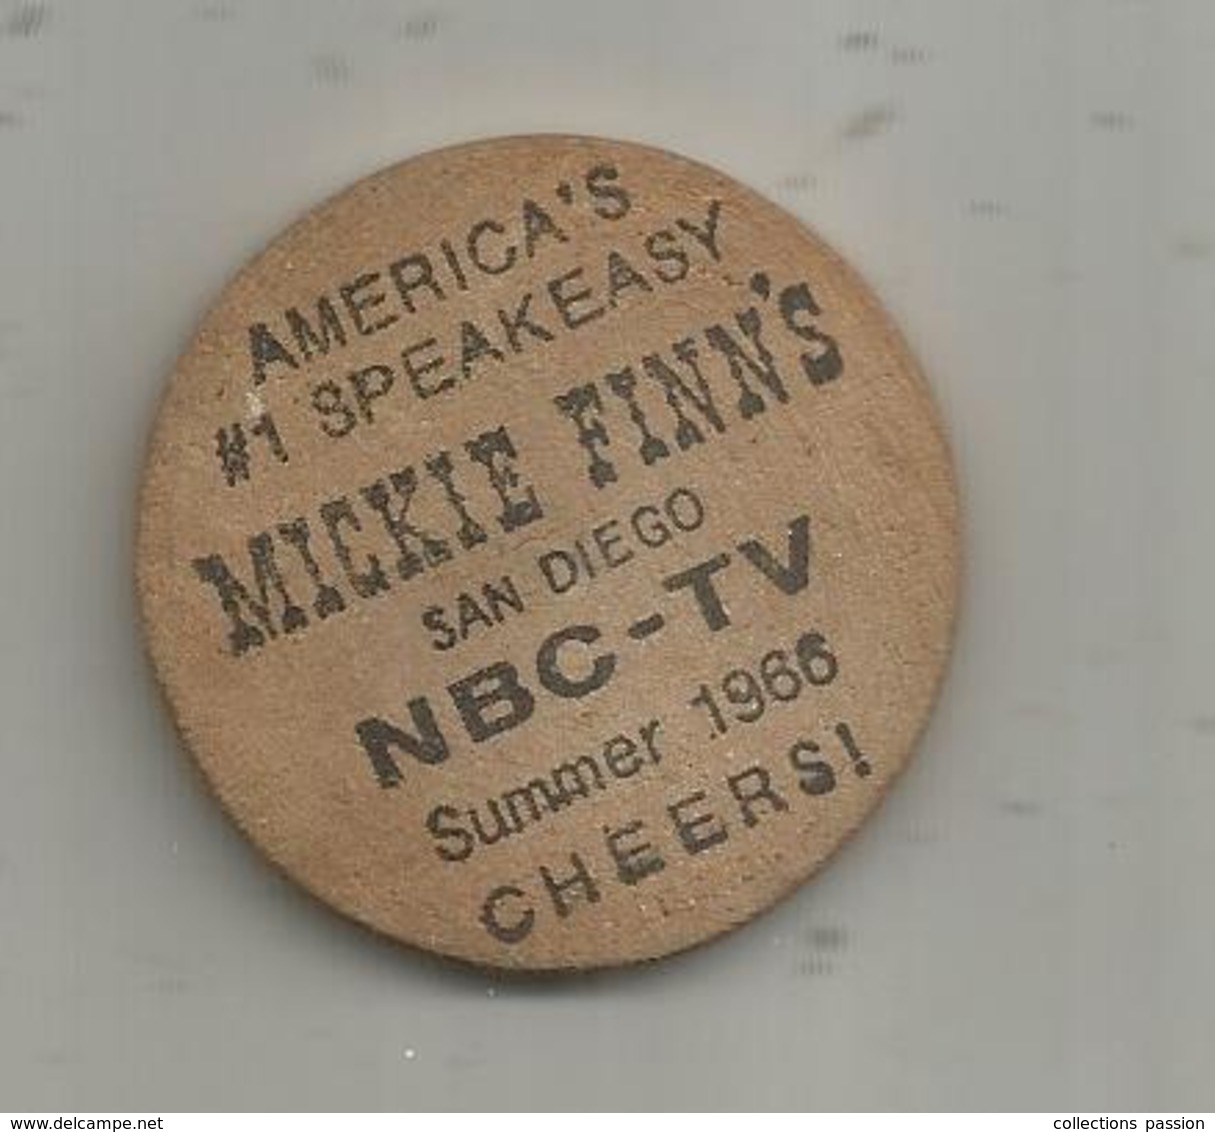 Jeton , Bois , One WOODEN NICKEL , United States Of America , 5 C , Mickie Finn's , SAN DIEGO , NBC-TV ,summer 1965 - Firma's